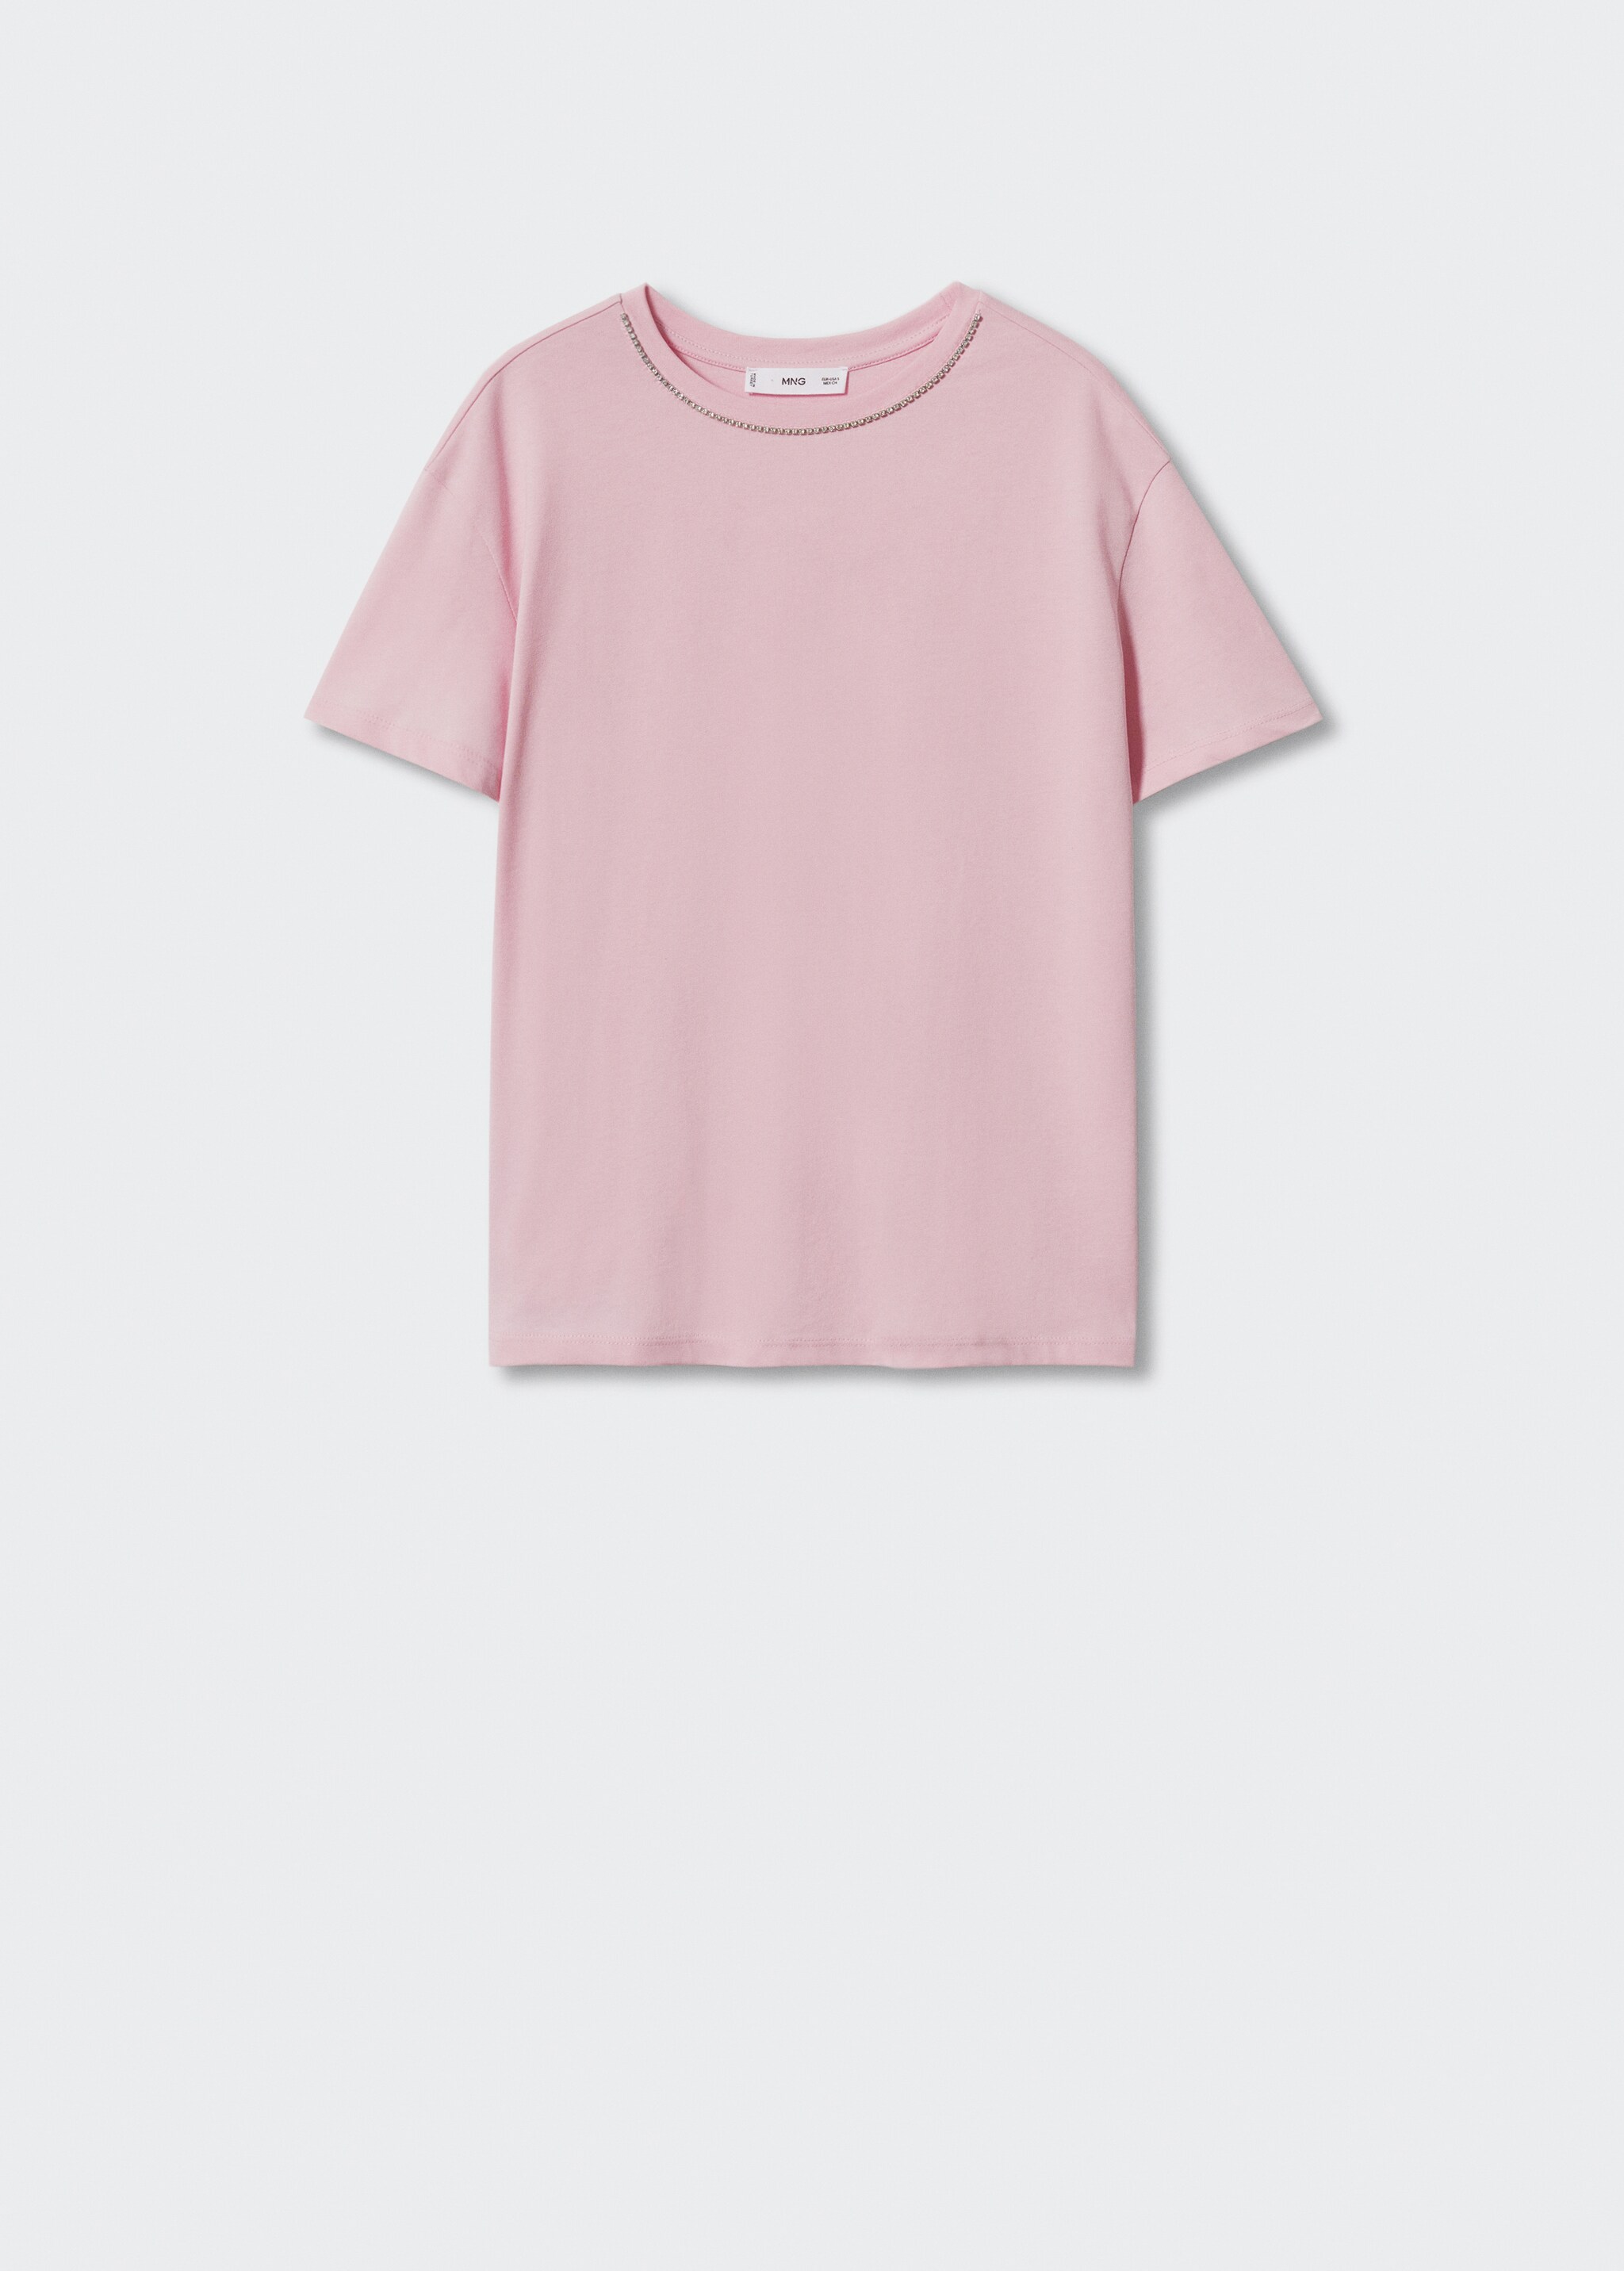 Camiseta algodón strass - Artículo sin modelo